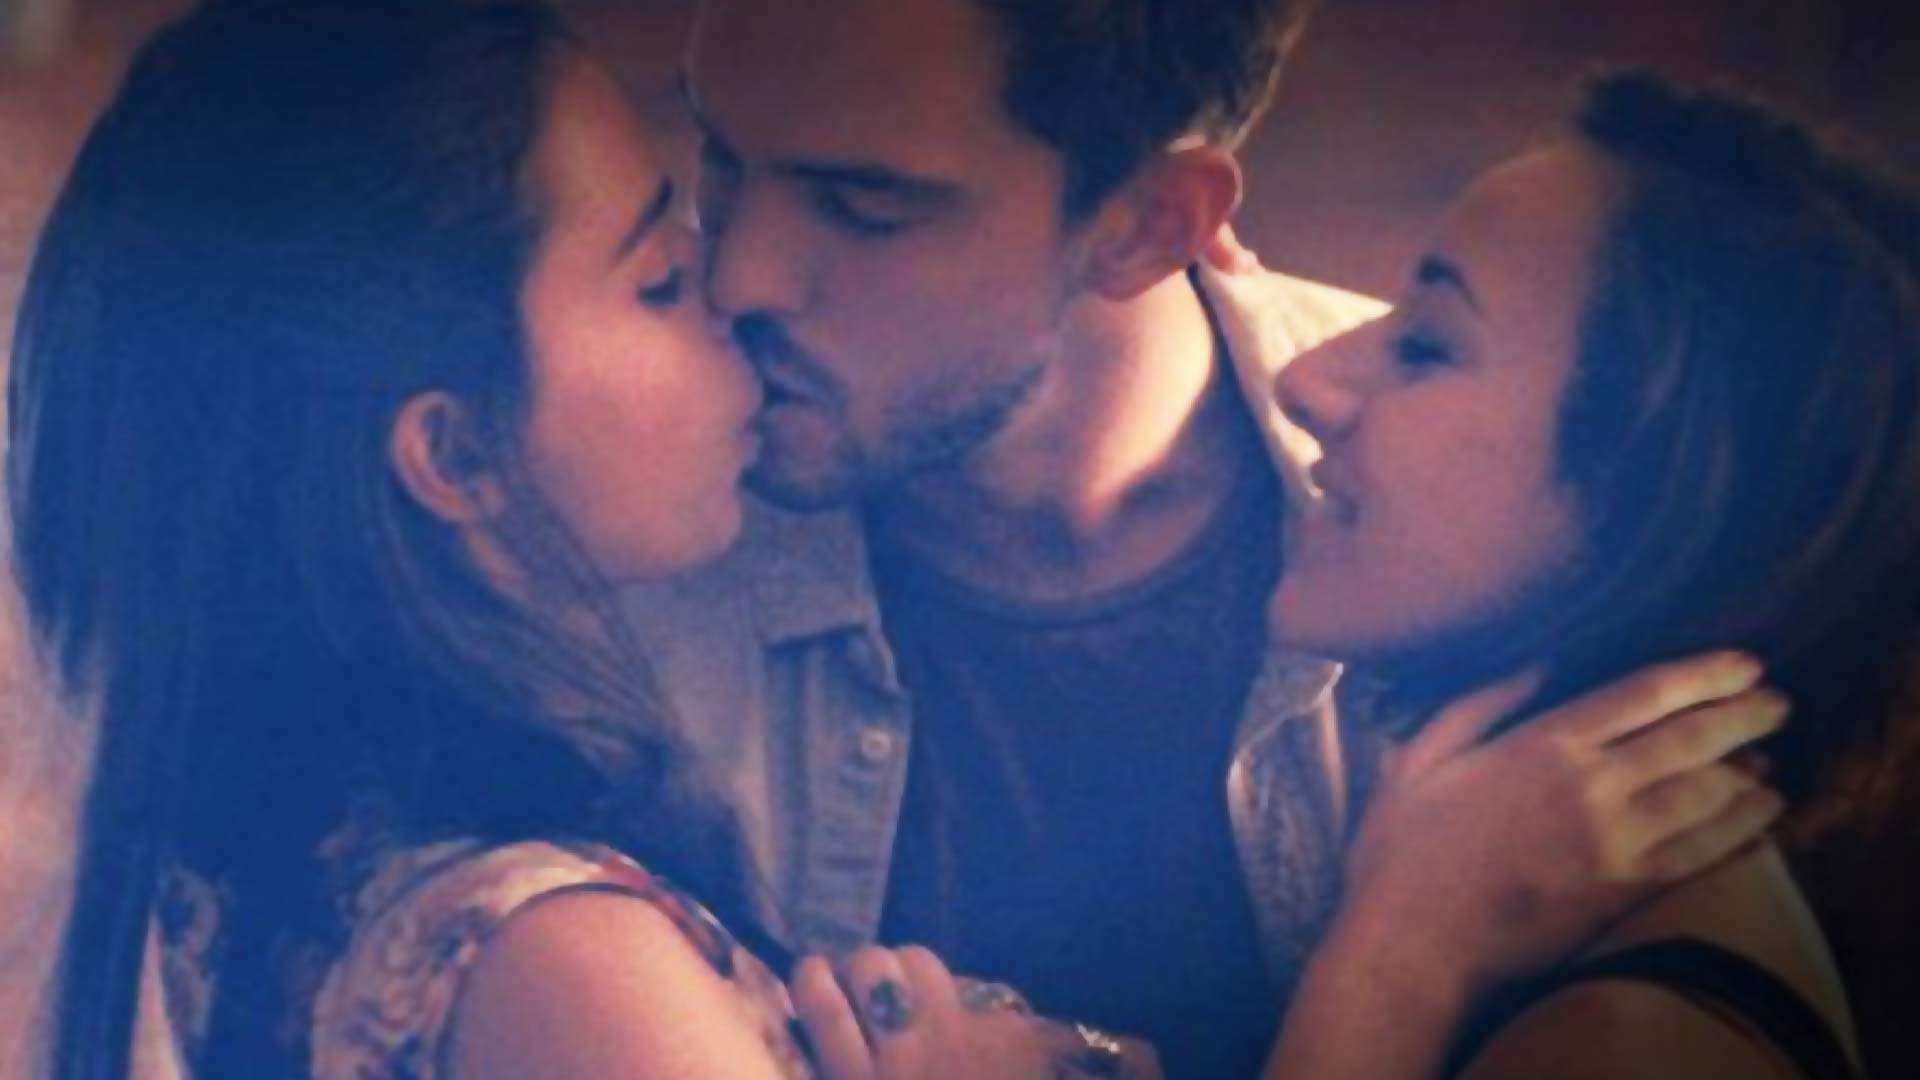 clarence corbett share steamy romance movies online photos